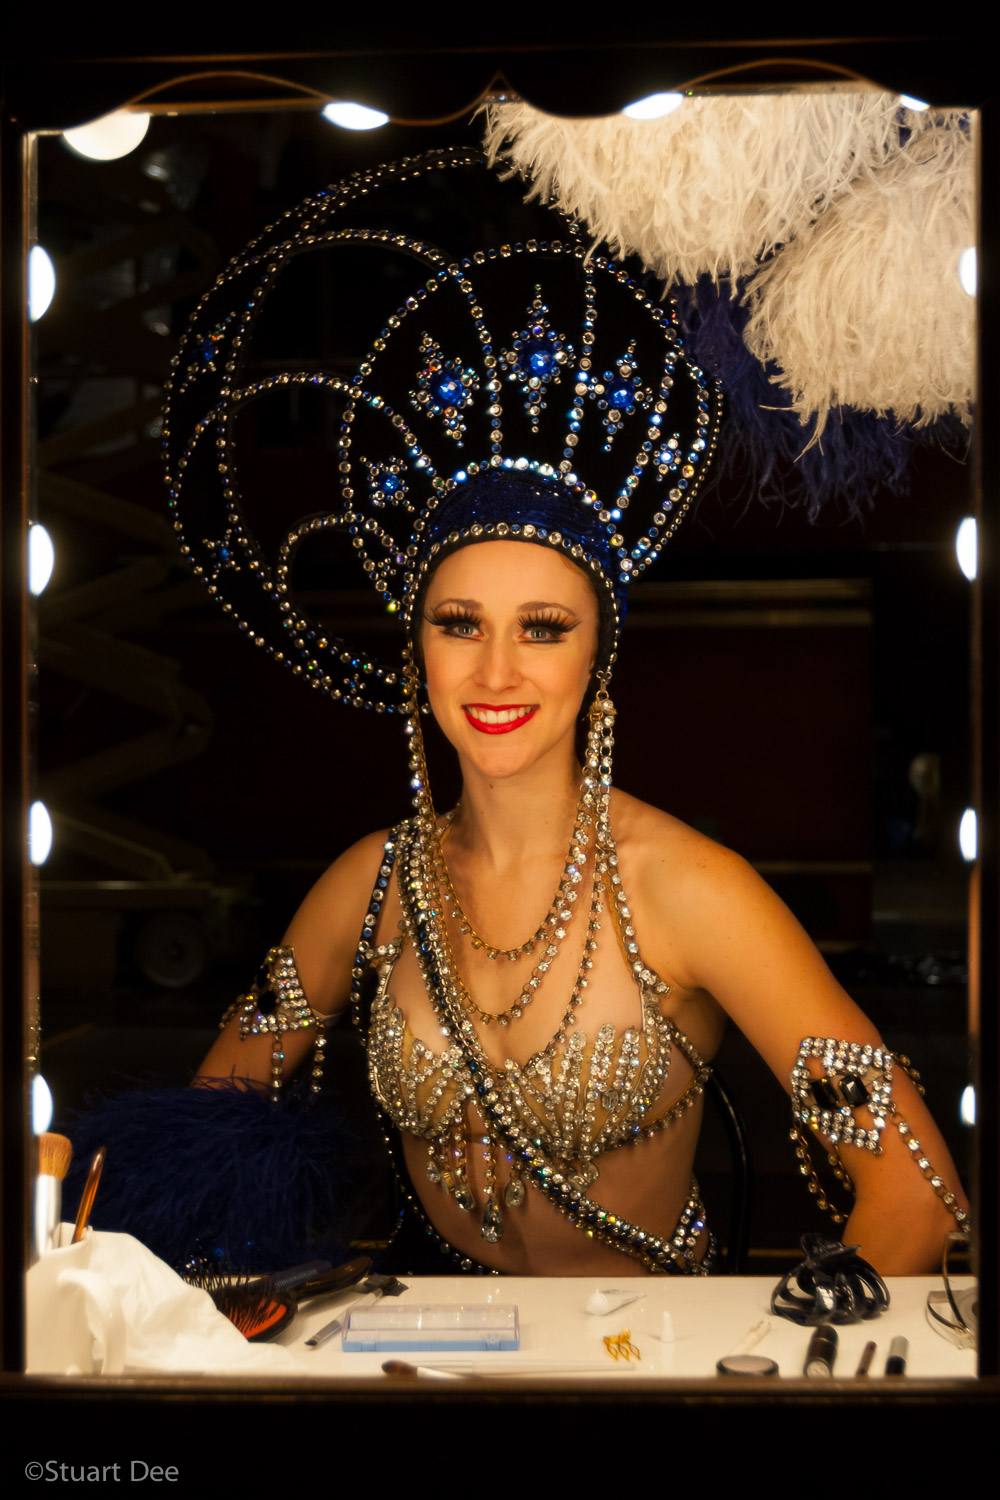  Showgirl at dressing room mirror, Las Vegas, Nevada, USA 